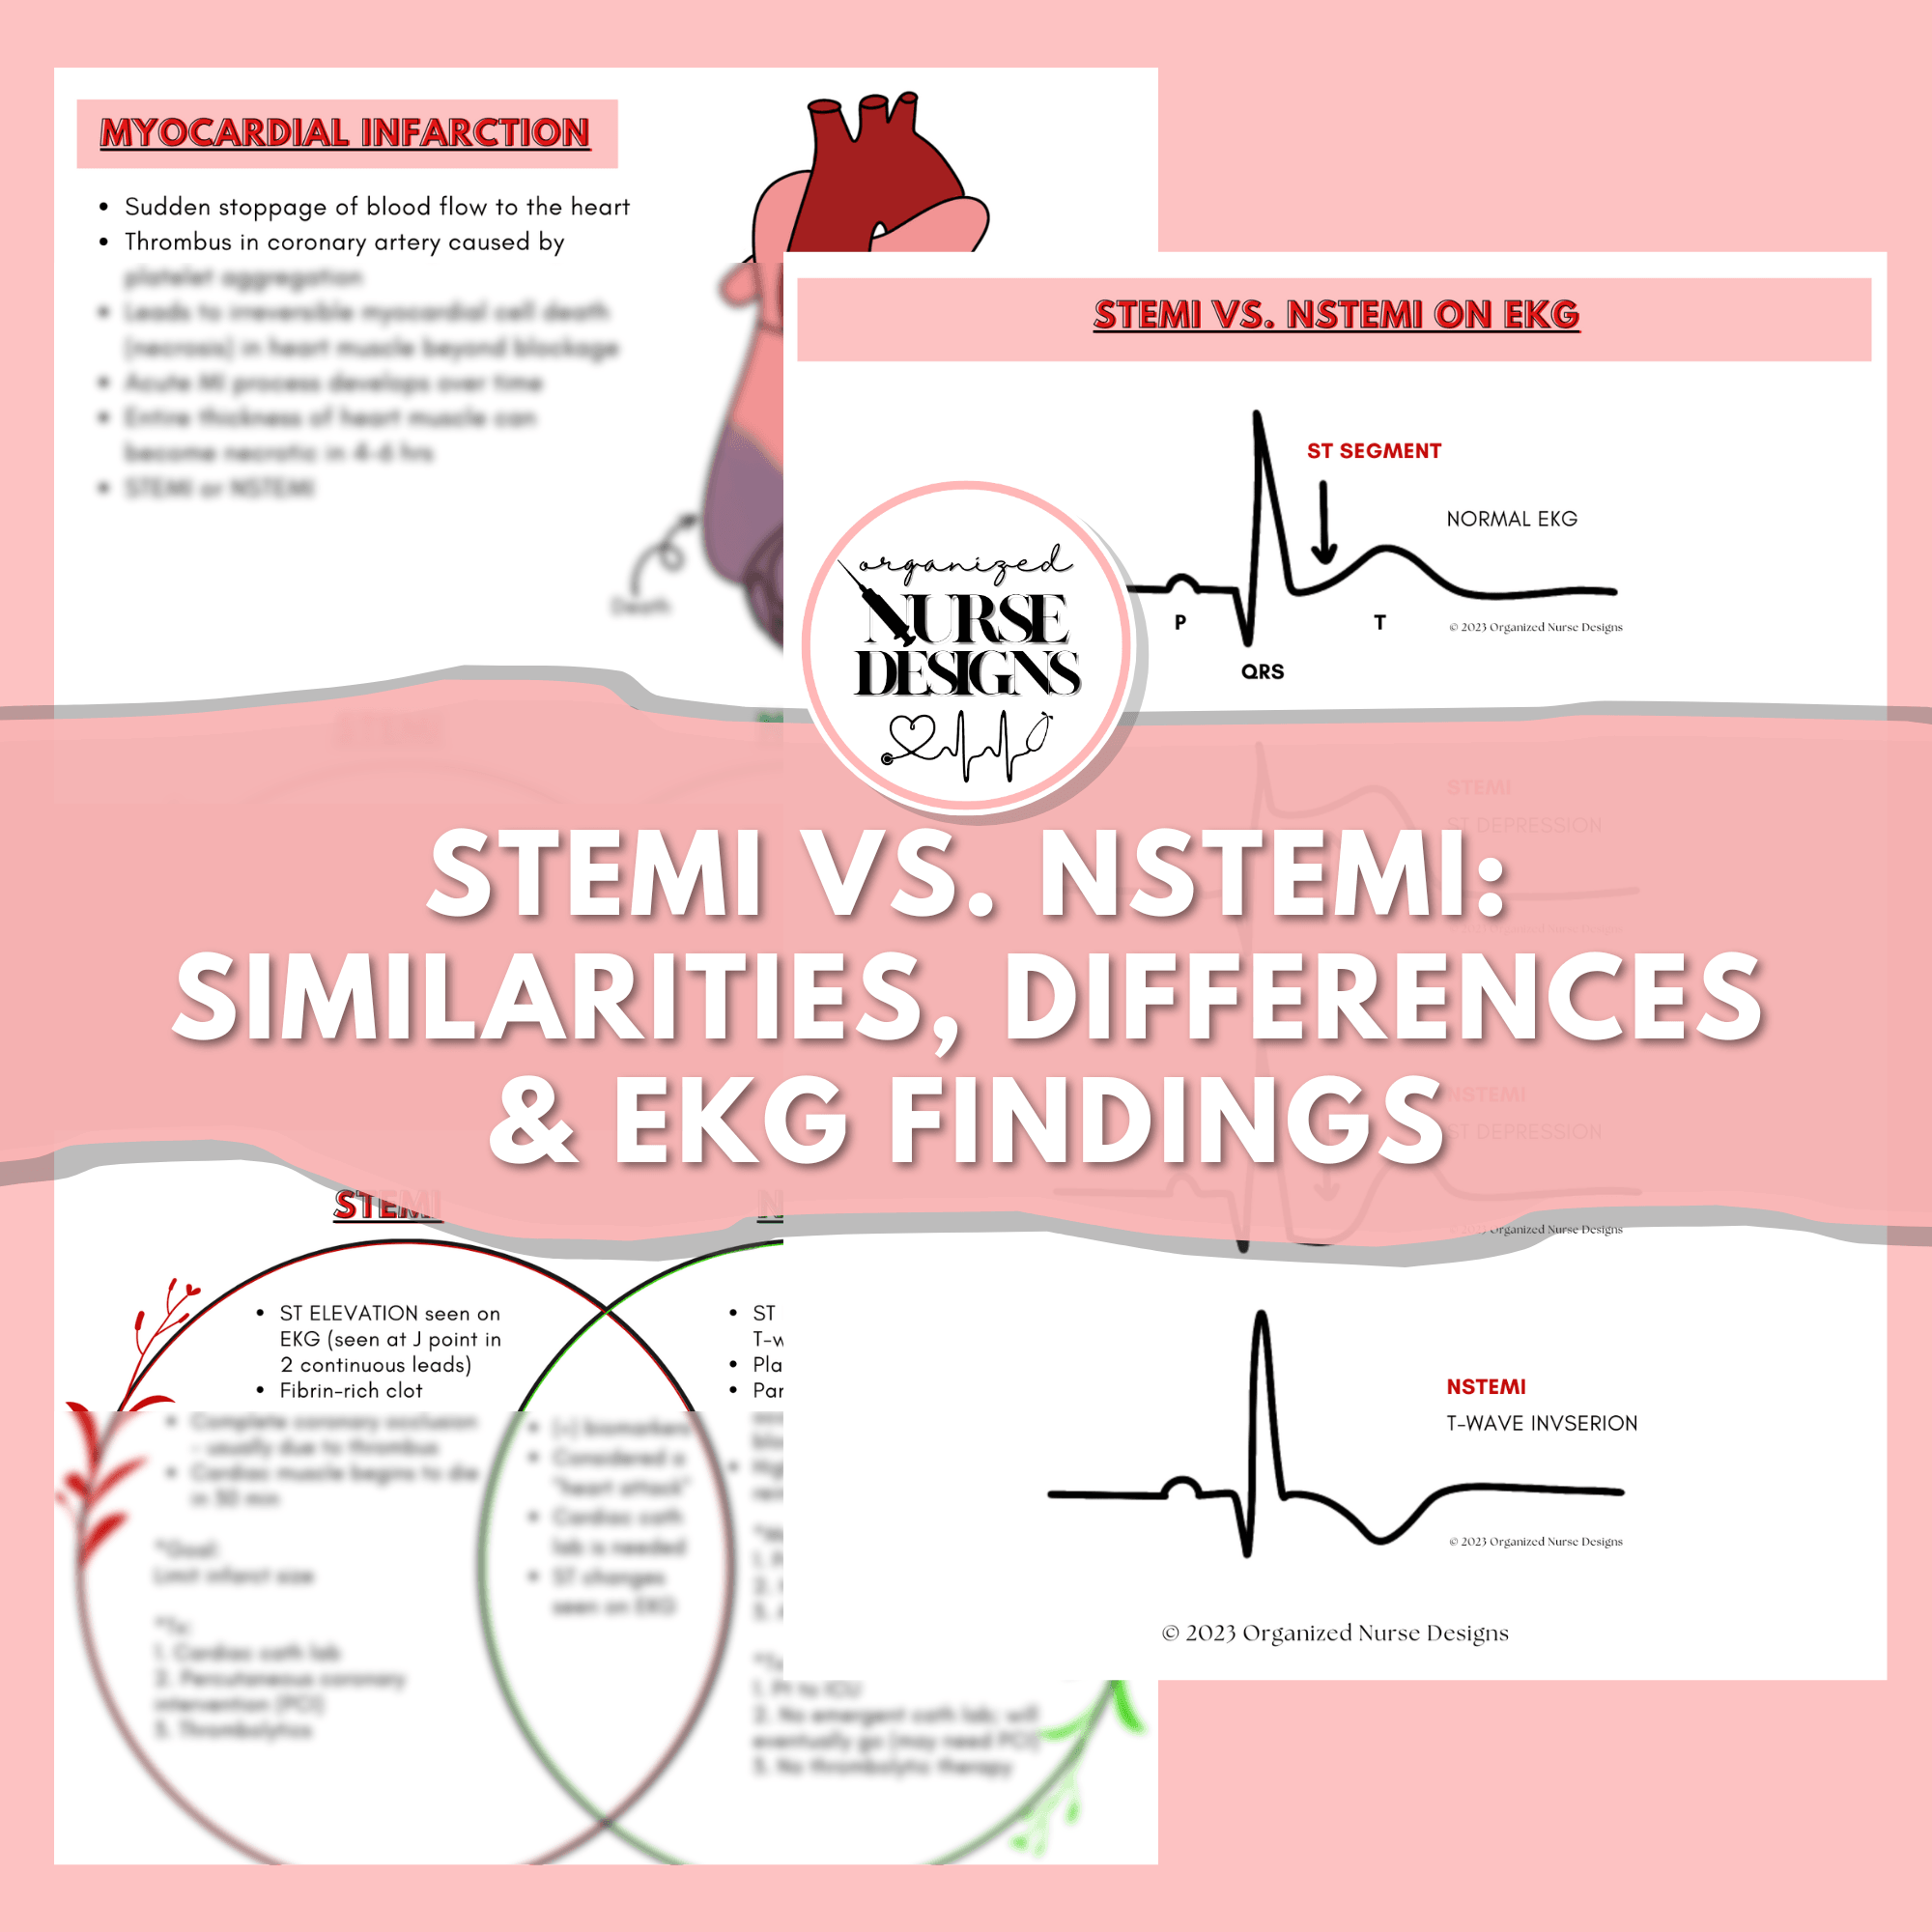 ekg cardiac study guide, stemi vs. nstemi, nursing school notes, nursing school study guide